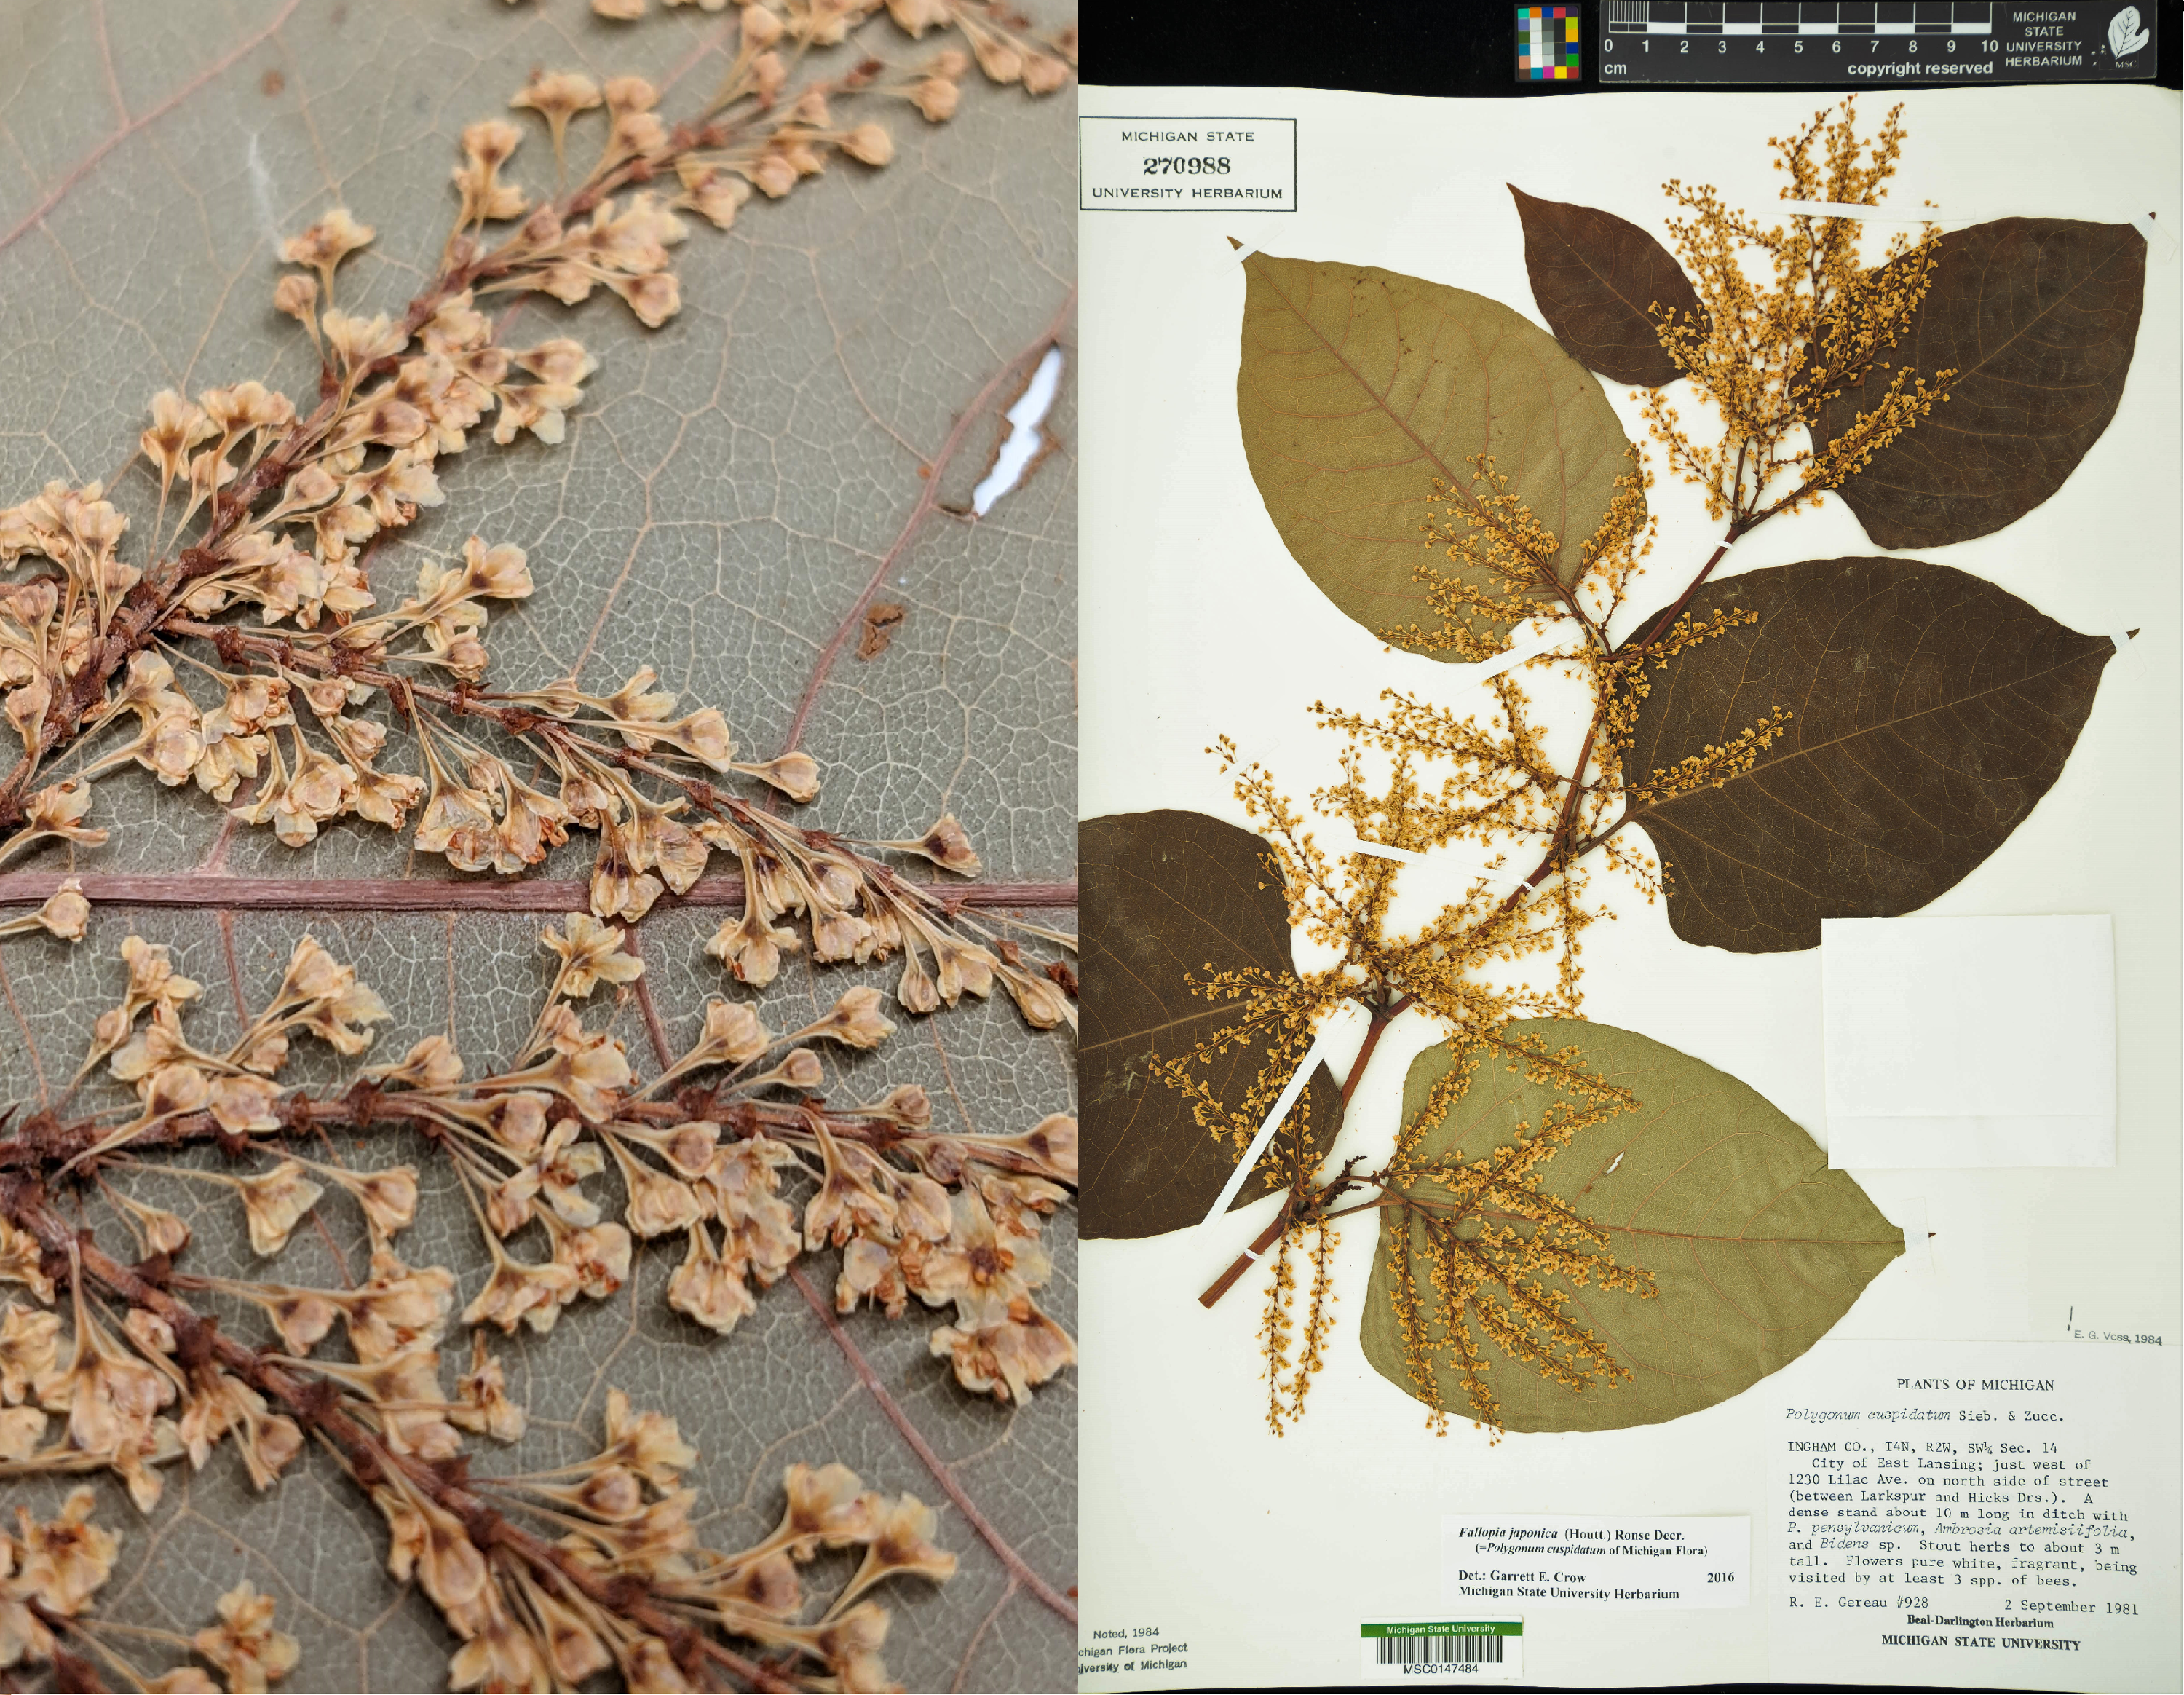 Japanese knotweed flowers and herbarium specimen